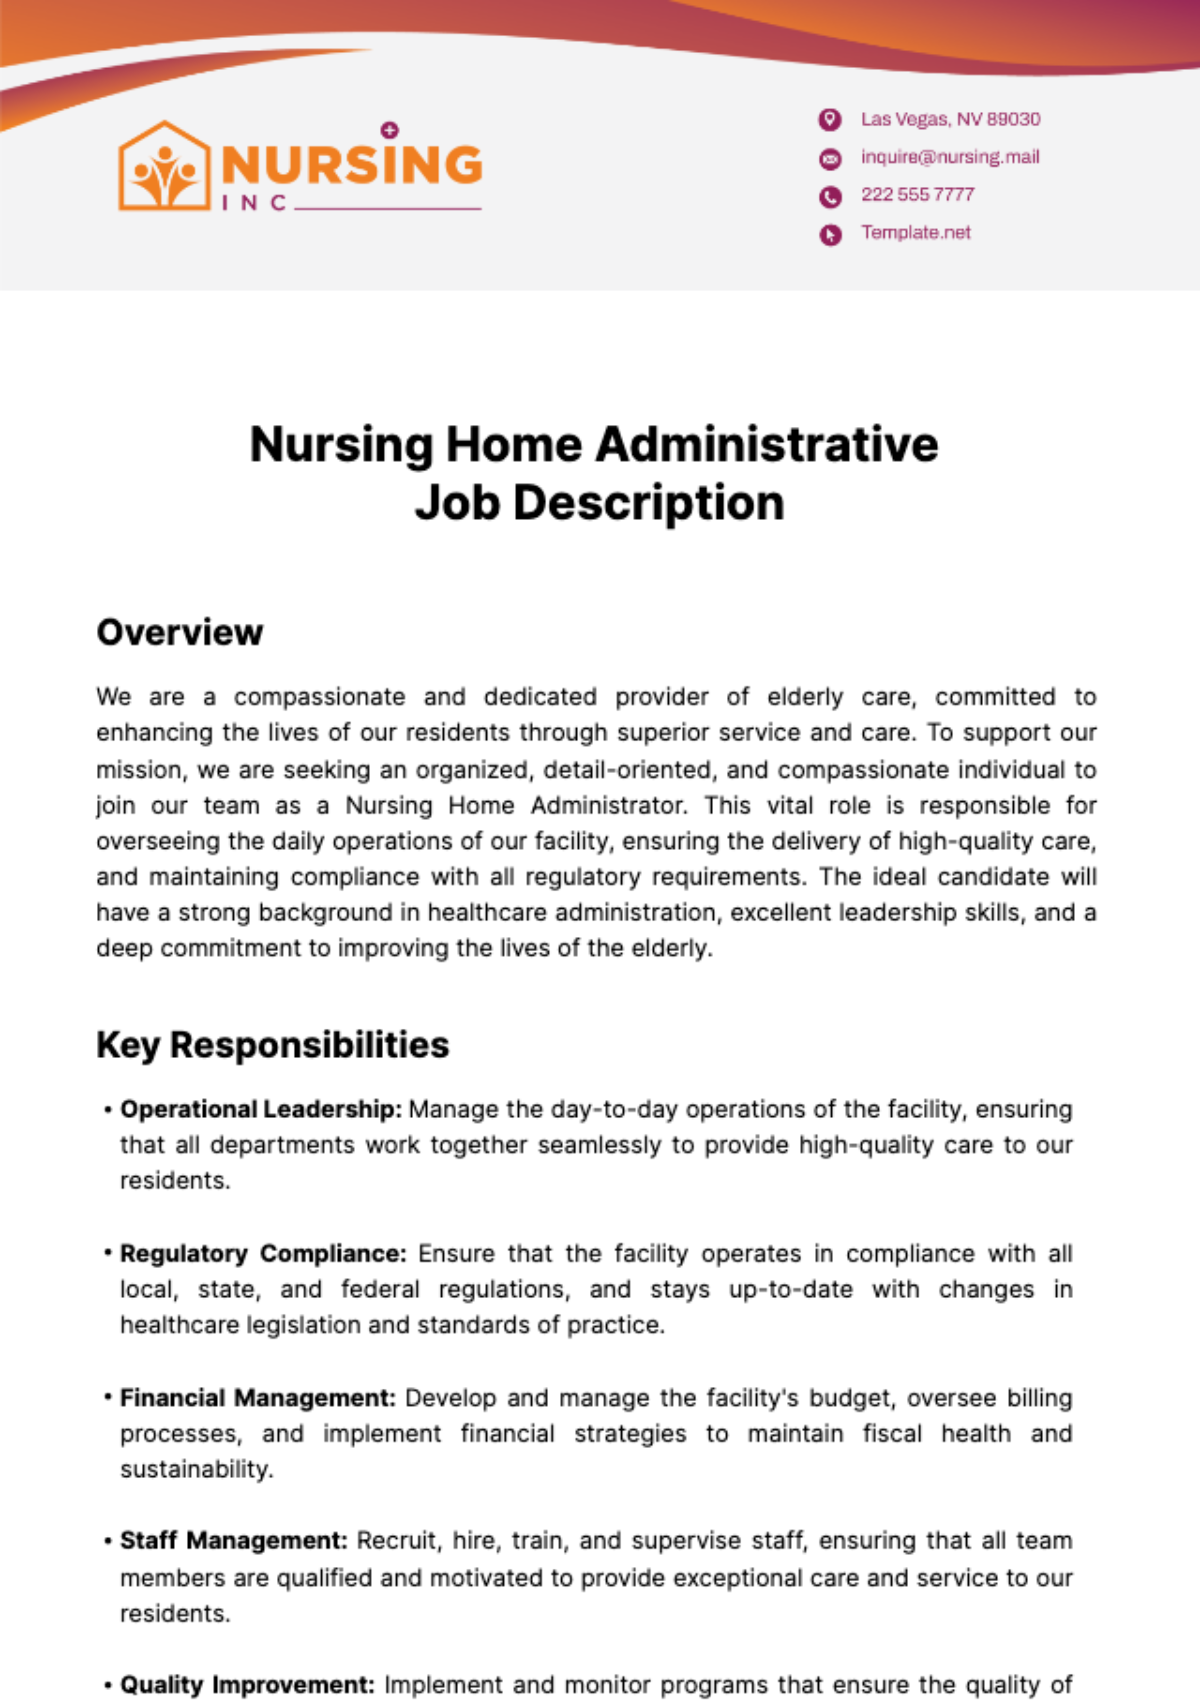 Nursing Home Administrative Job Description Template